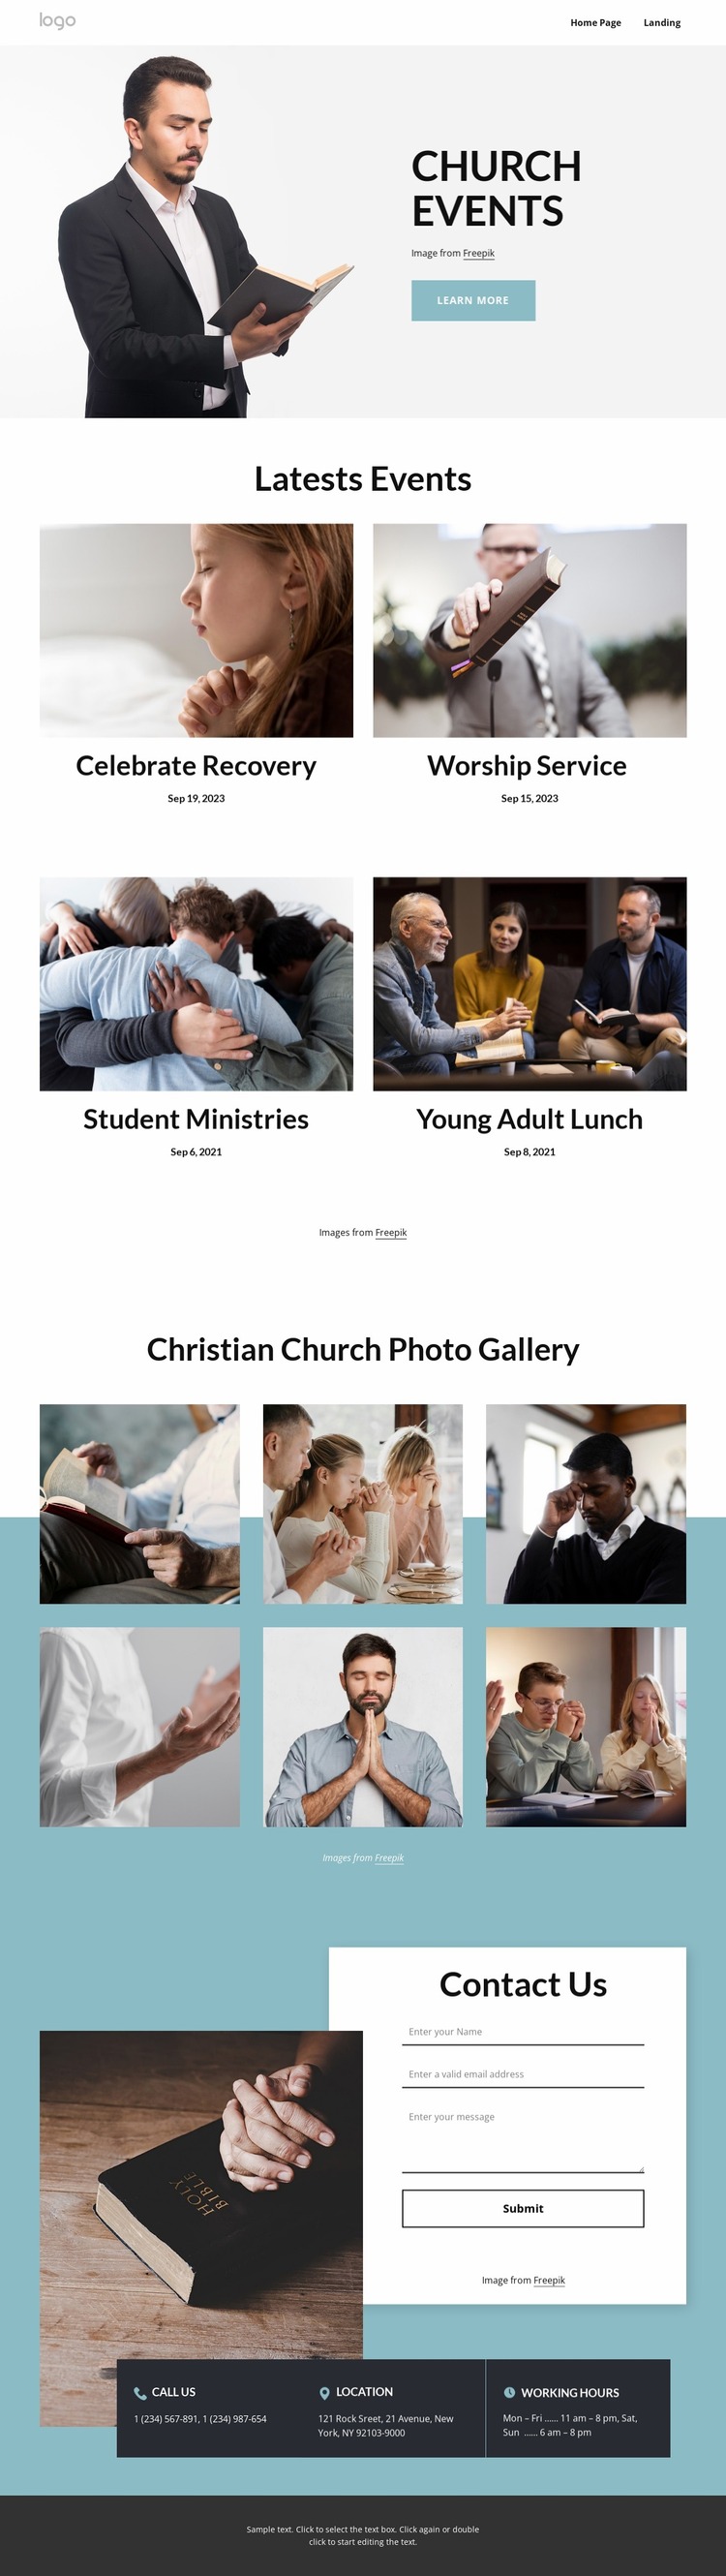 Church events Website Mockup